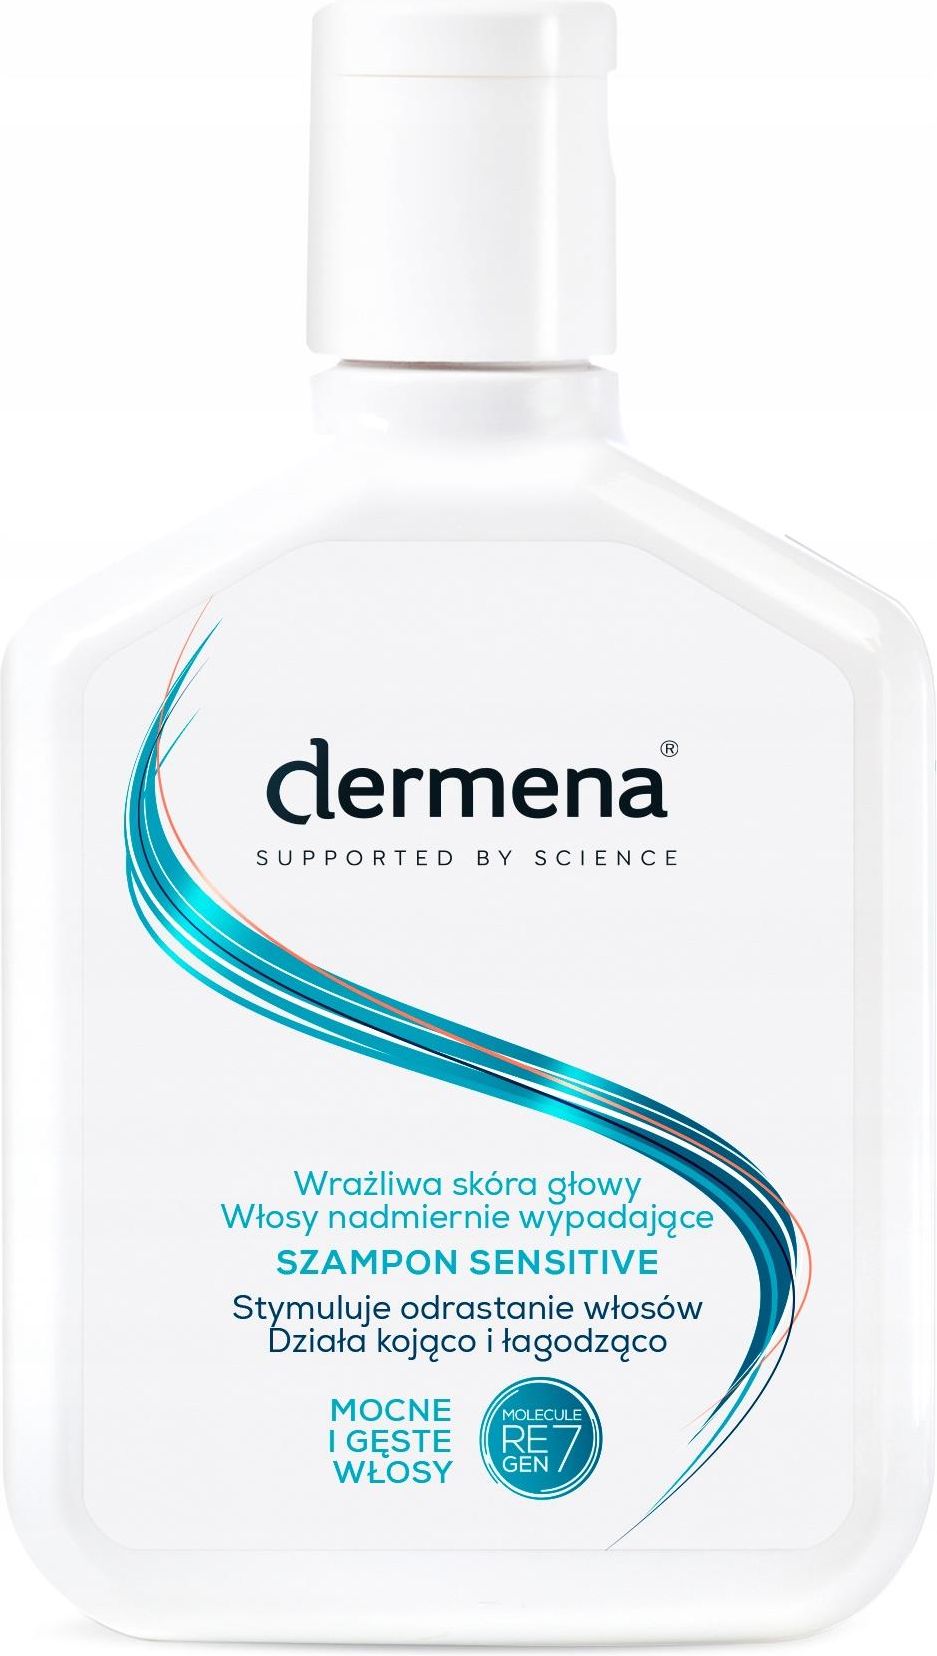 dermena color care szampon wizaz